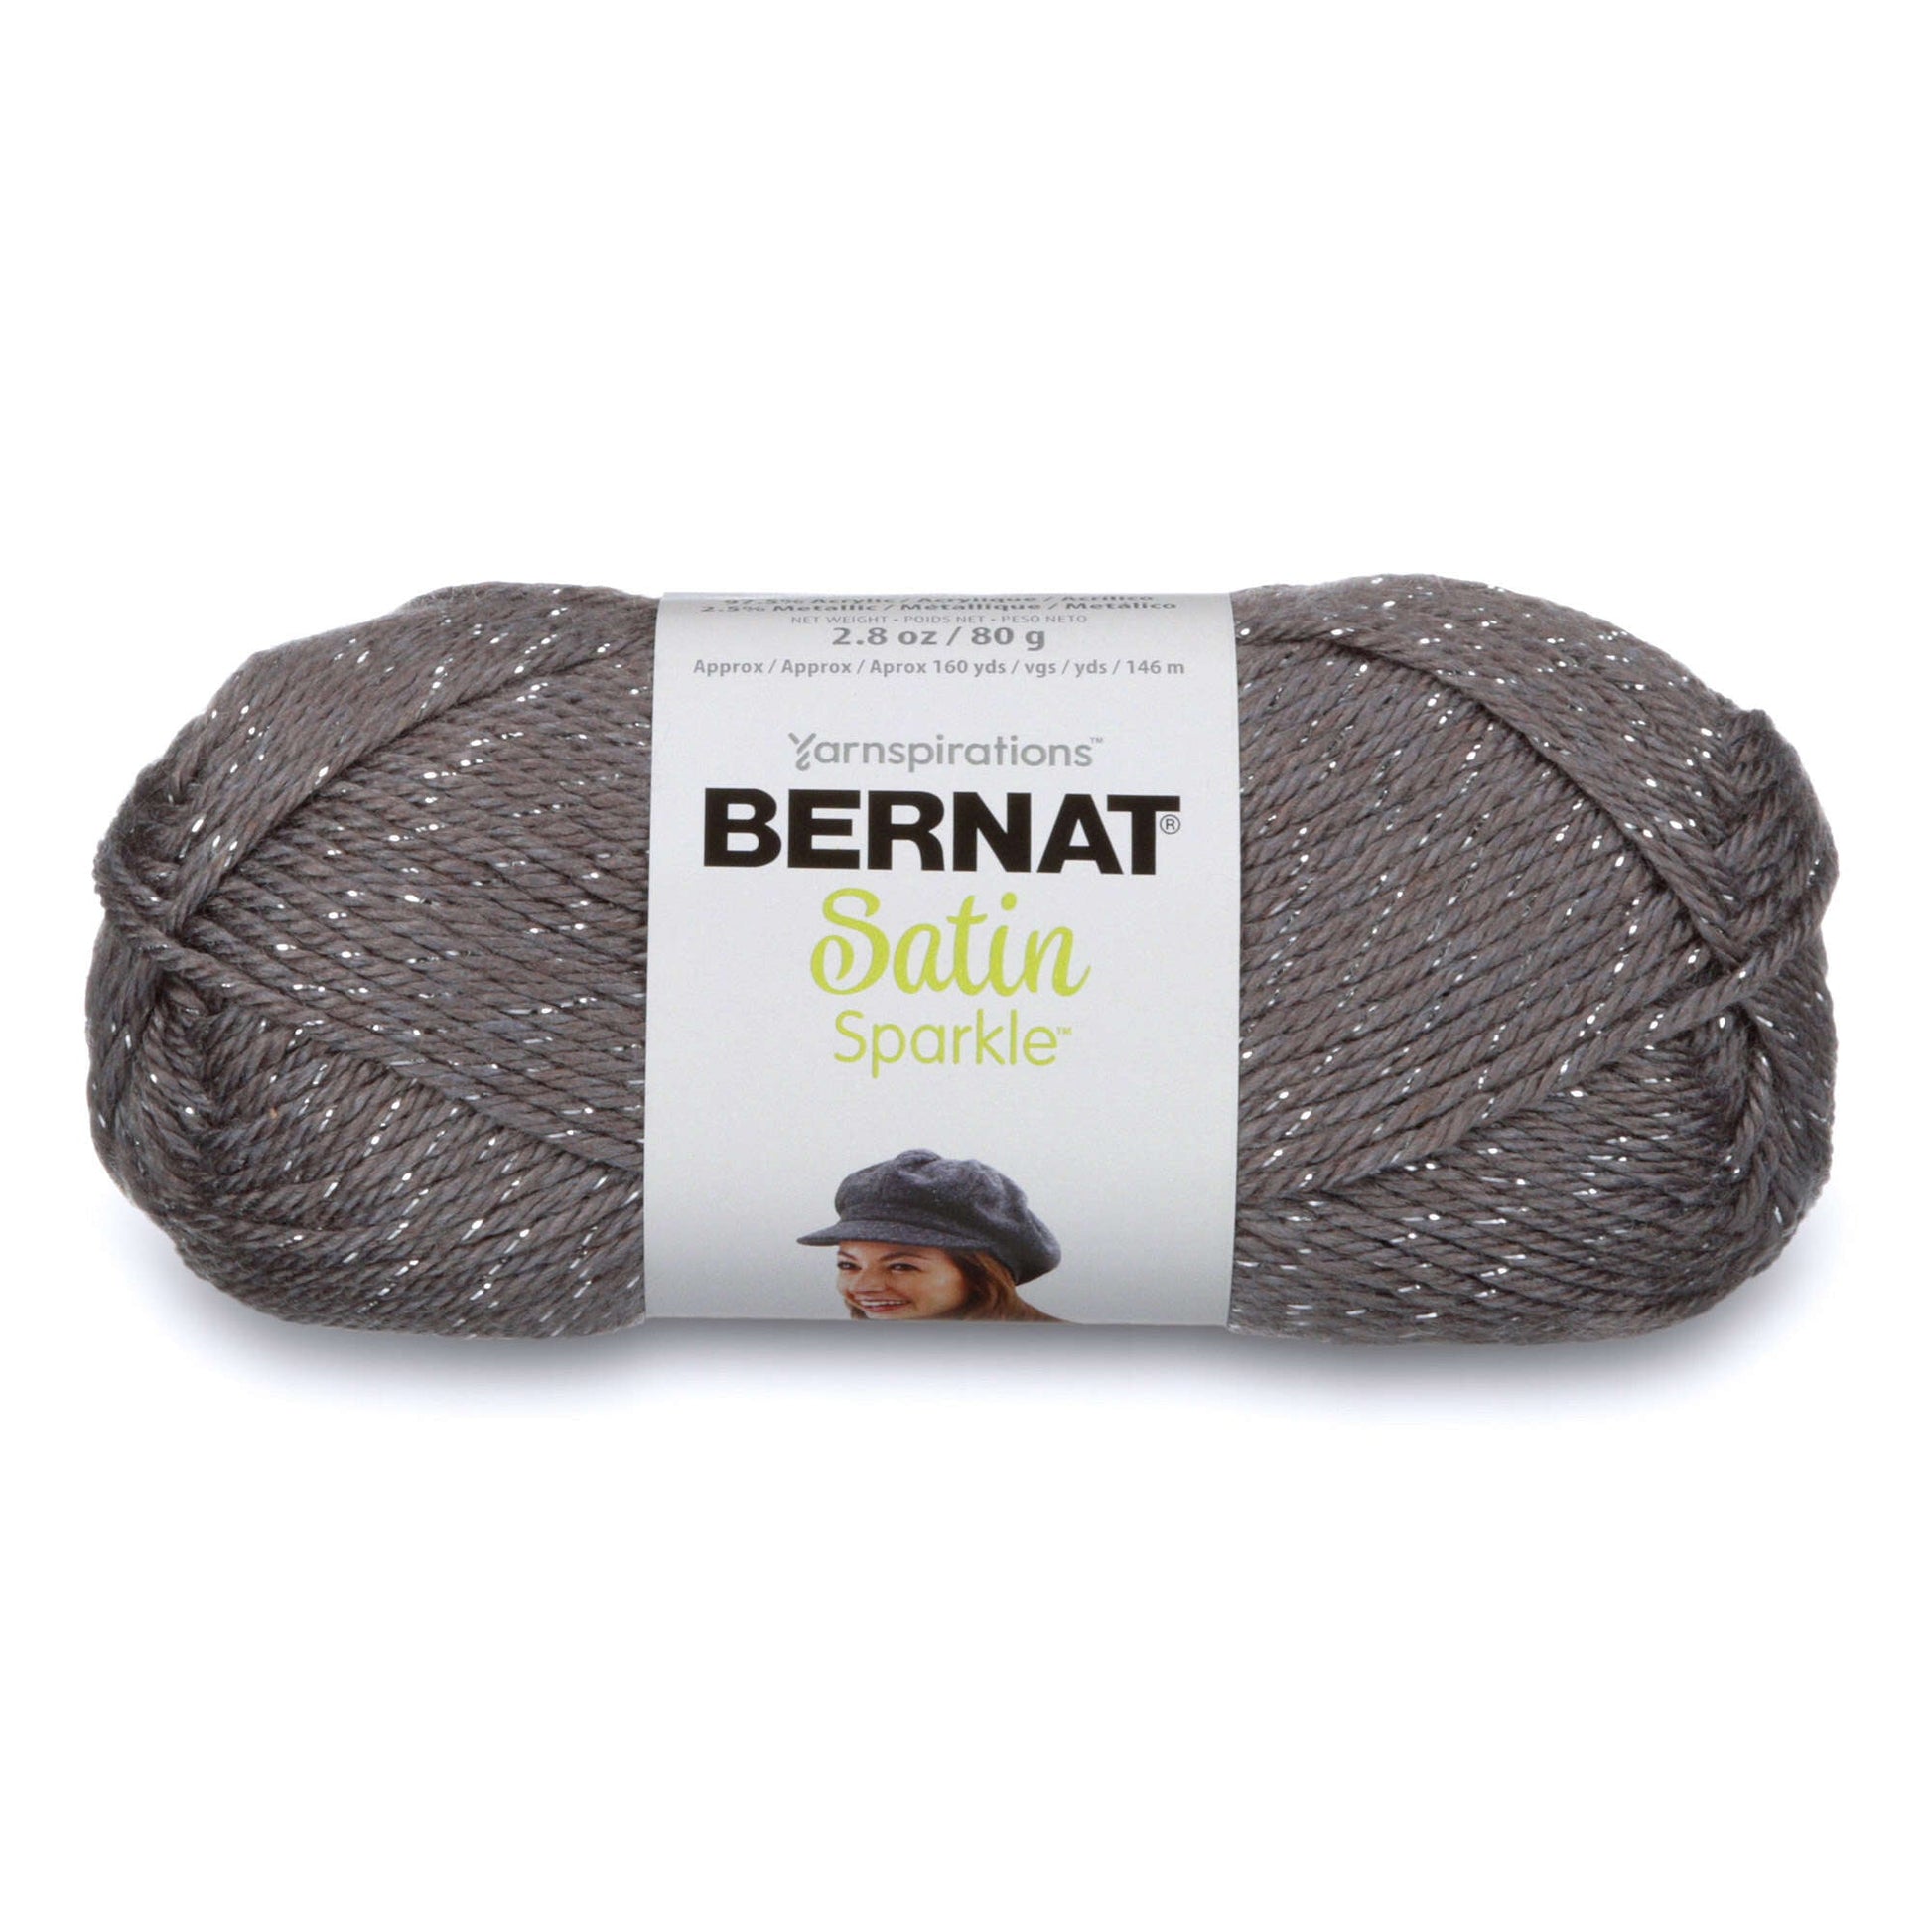 Bernat Satin Sparkle Yarn - Discontinued shades